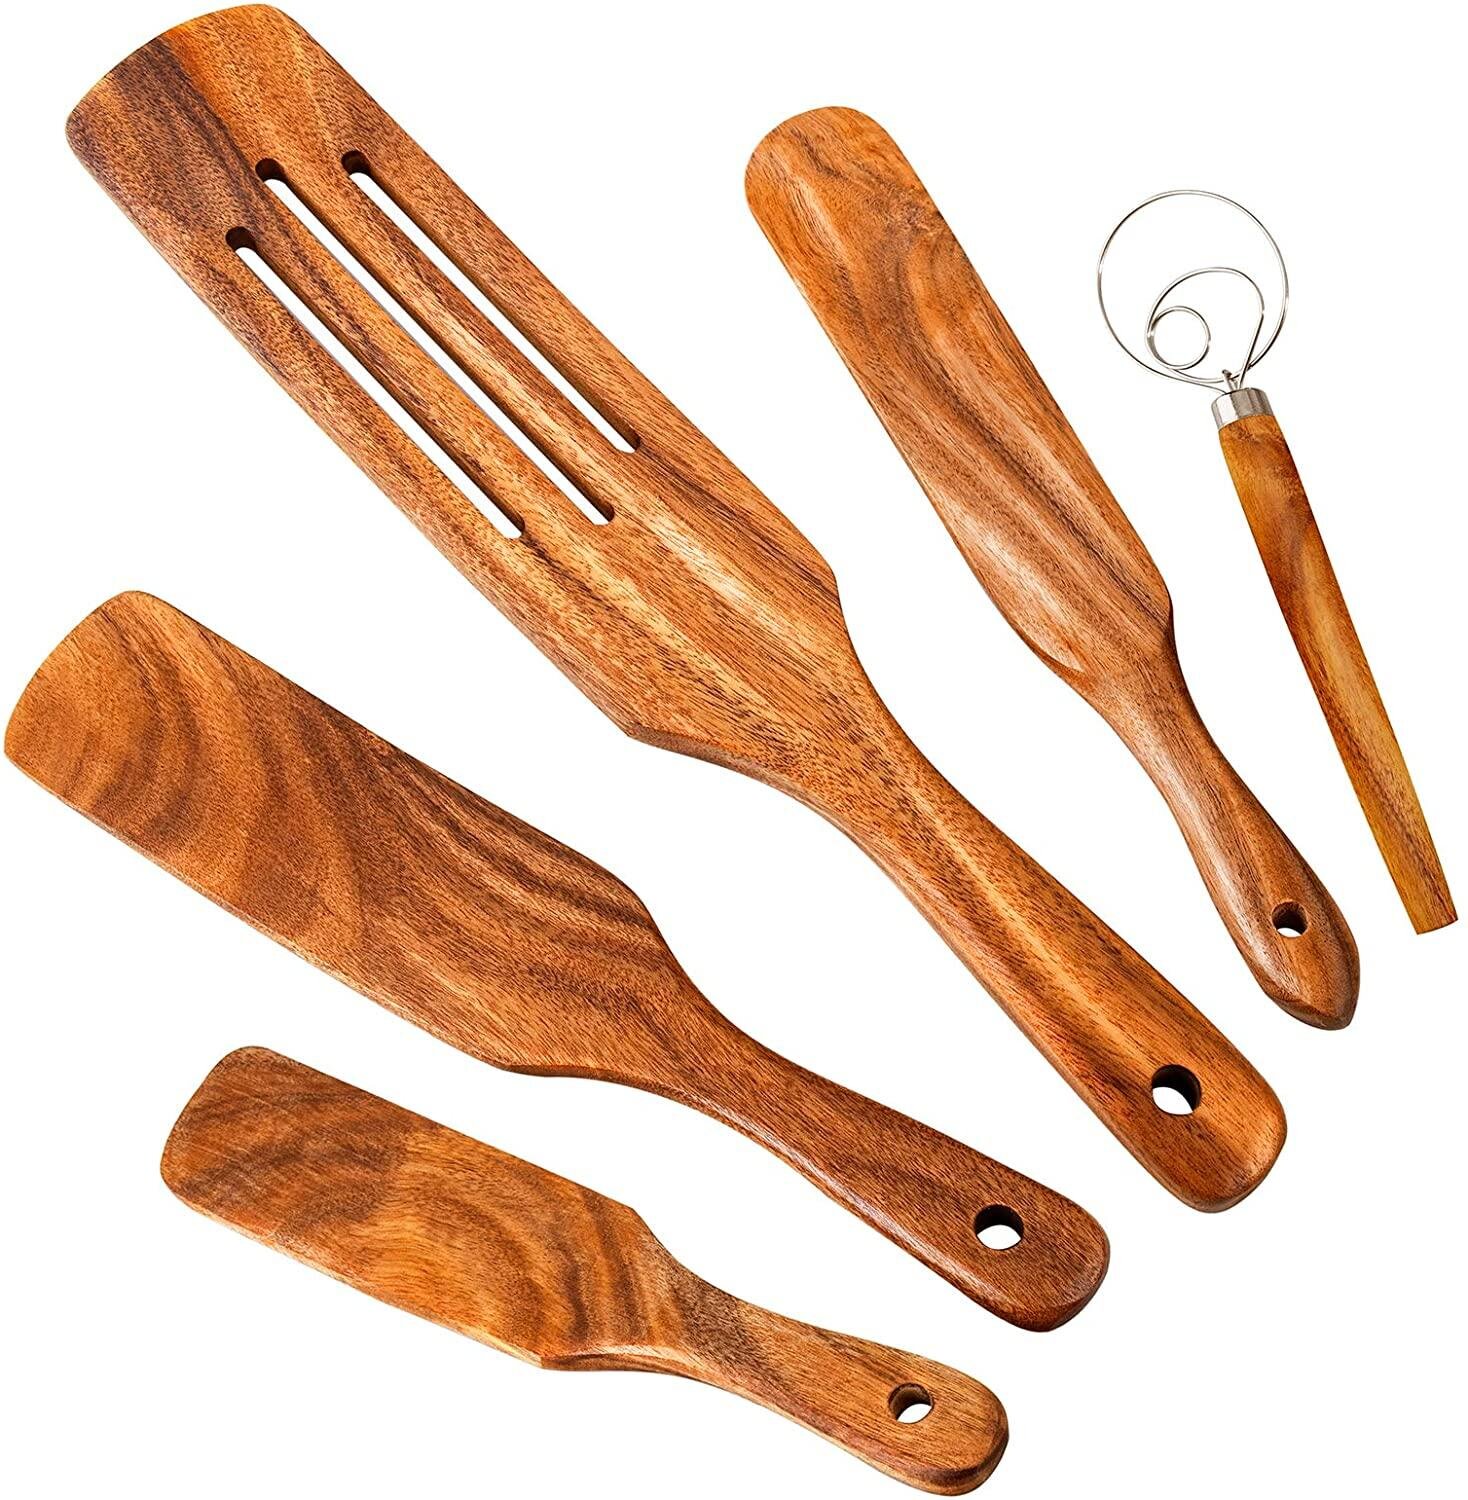 Wooden Spurtles Set Spatula Set,5Pcs Spurtles Kitchen Tools Non Scratch Natural Teak Slotted Stirring Spatula,Baking,Whisking,Smashing,Scooping,Spreading,Measuring Spoons.